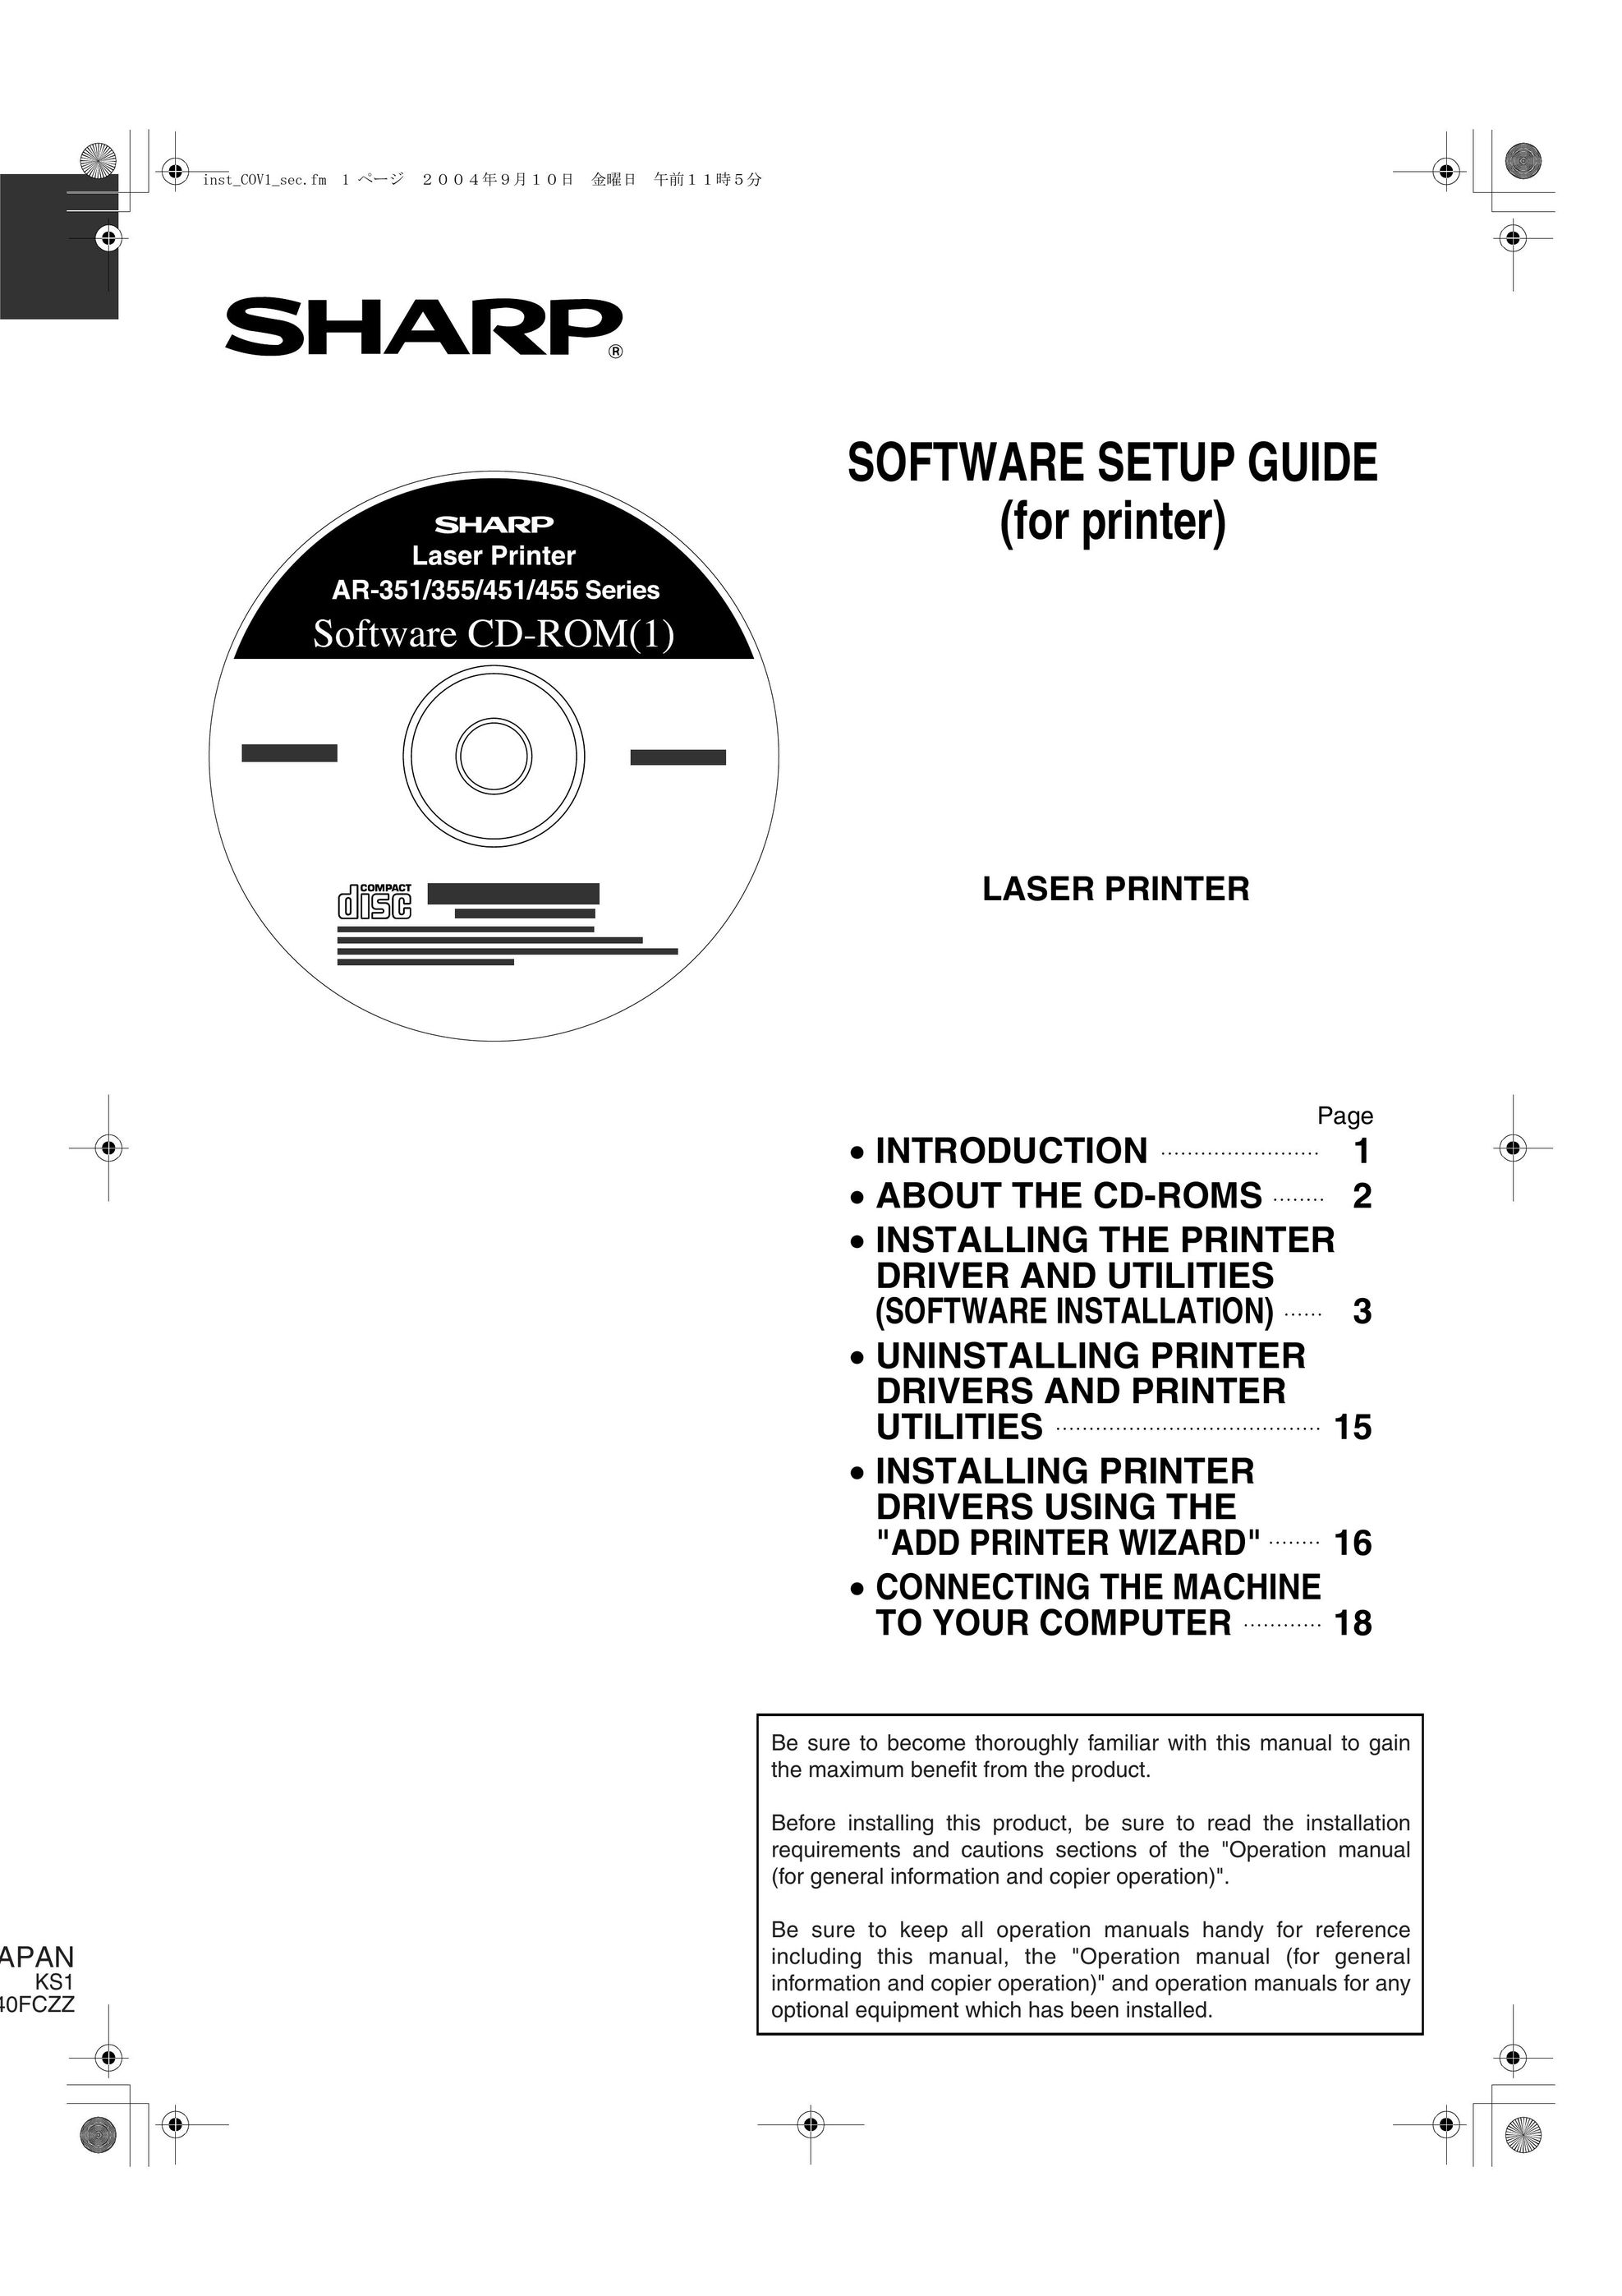 Sharp AR-351 Printer User Manual